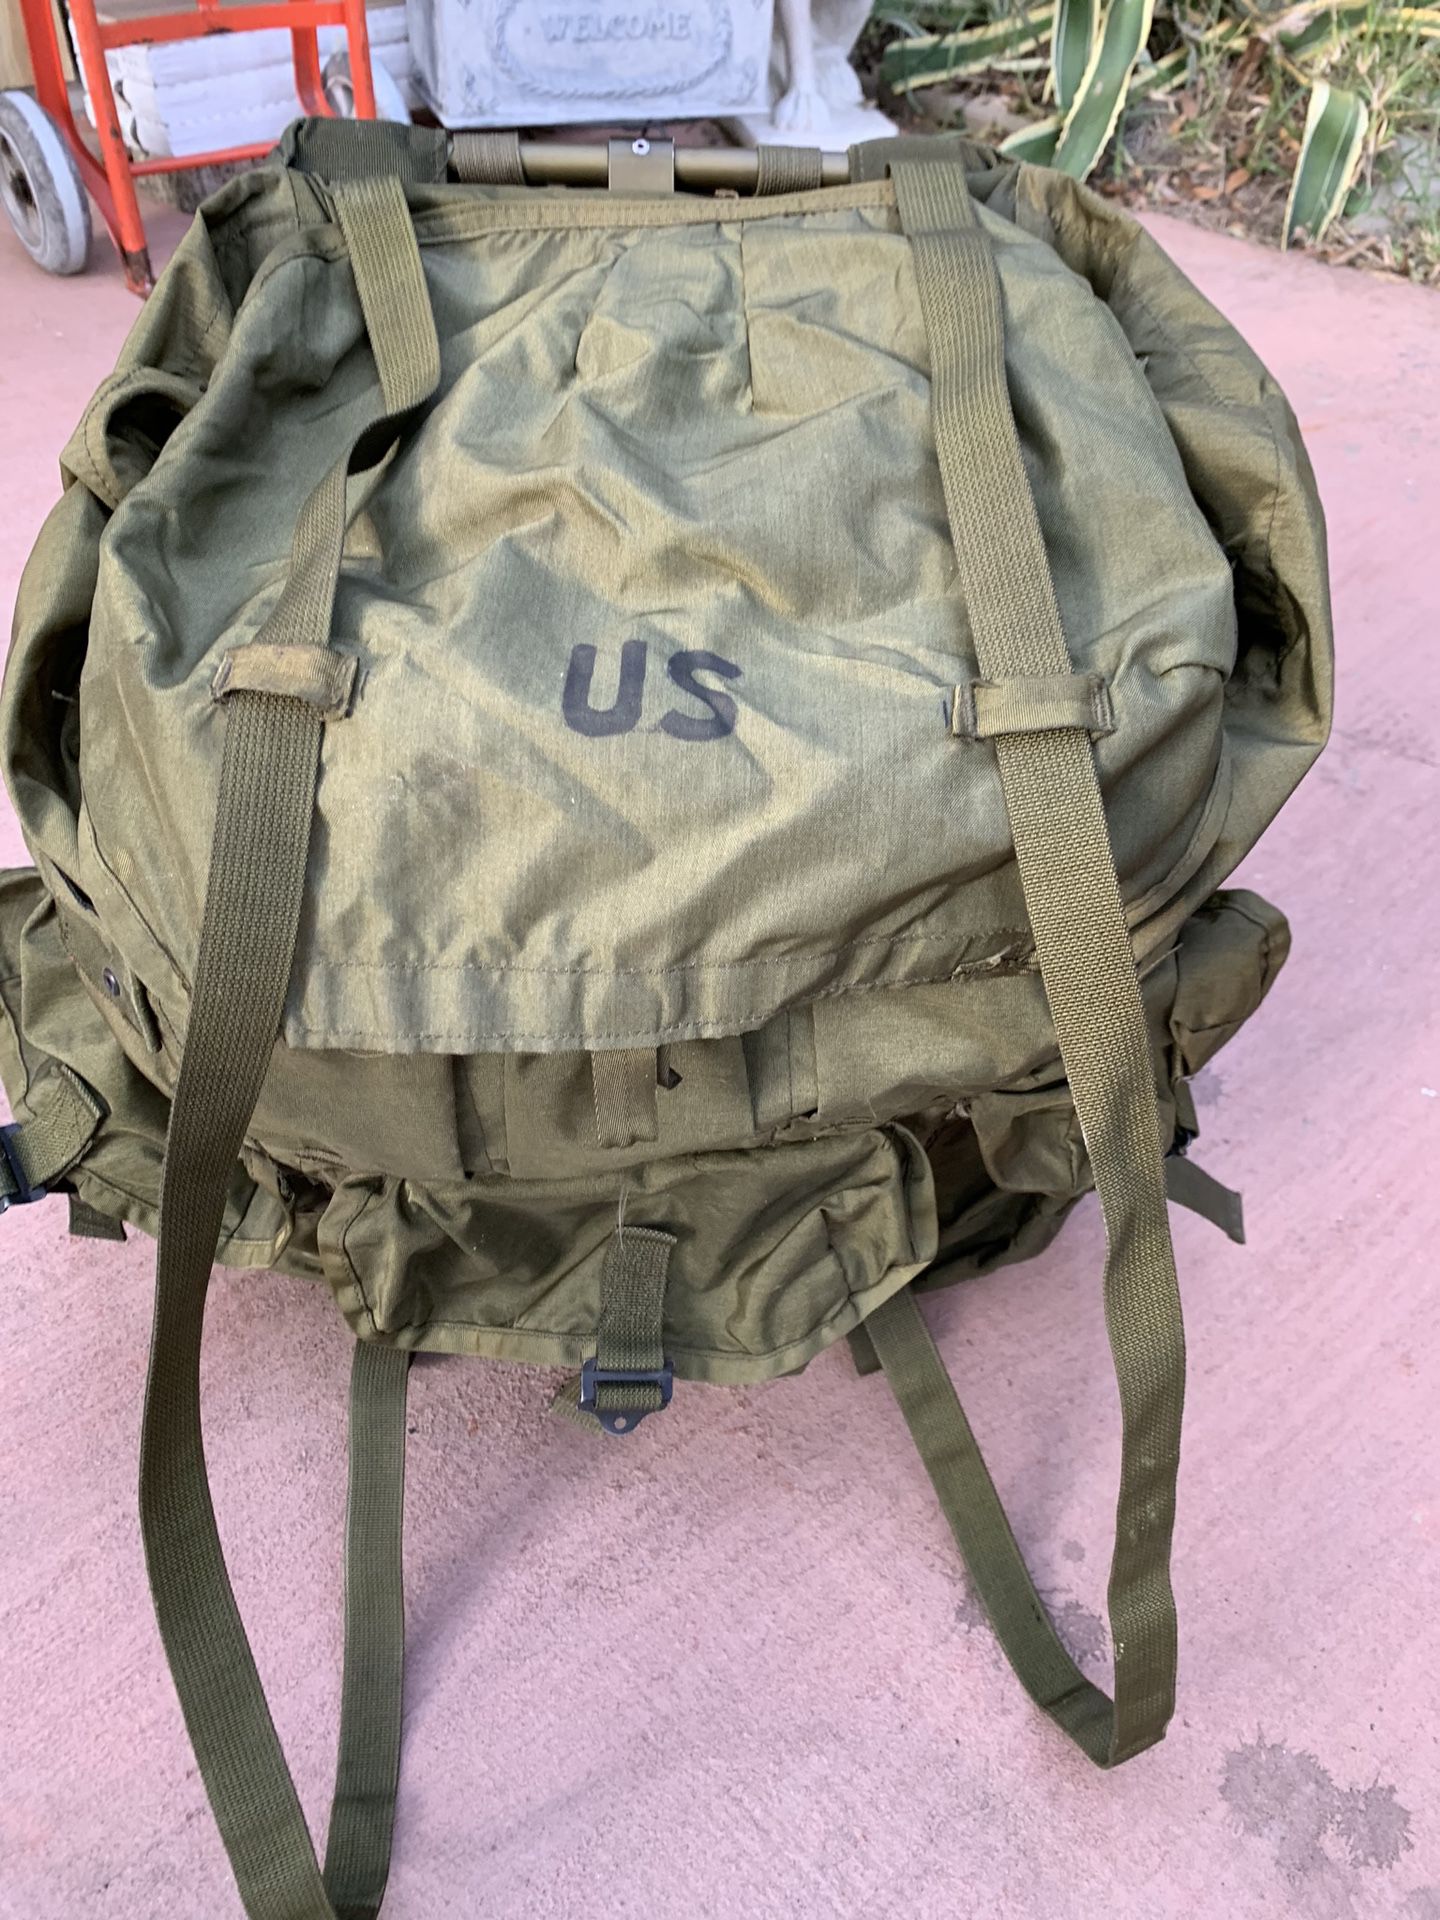 US backpack